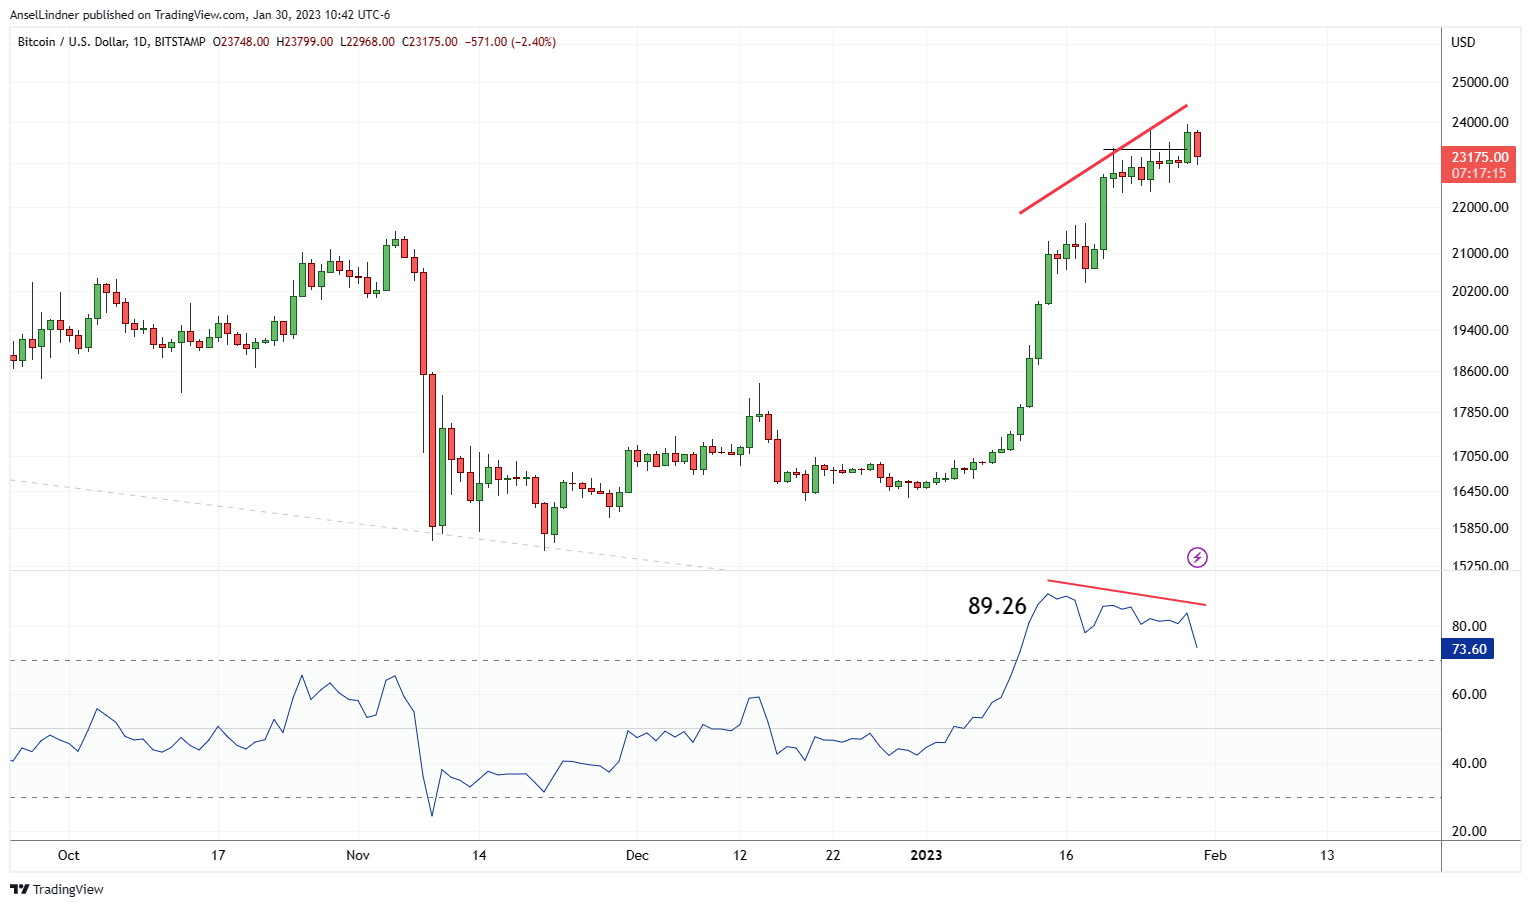 Bitcoin daily chart with RSI bearish divergence